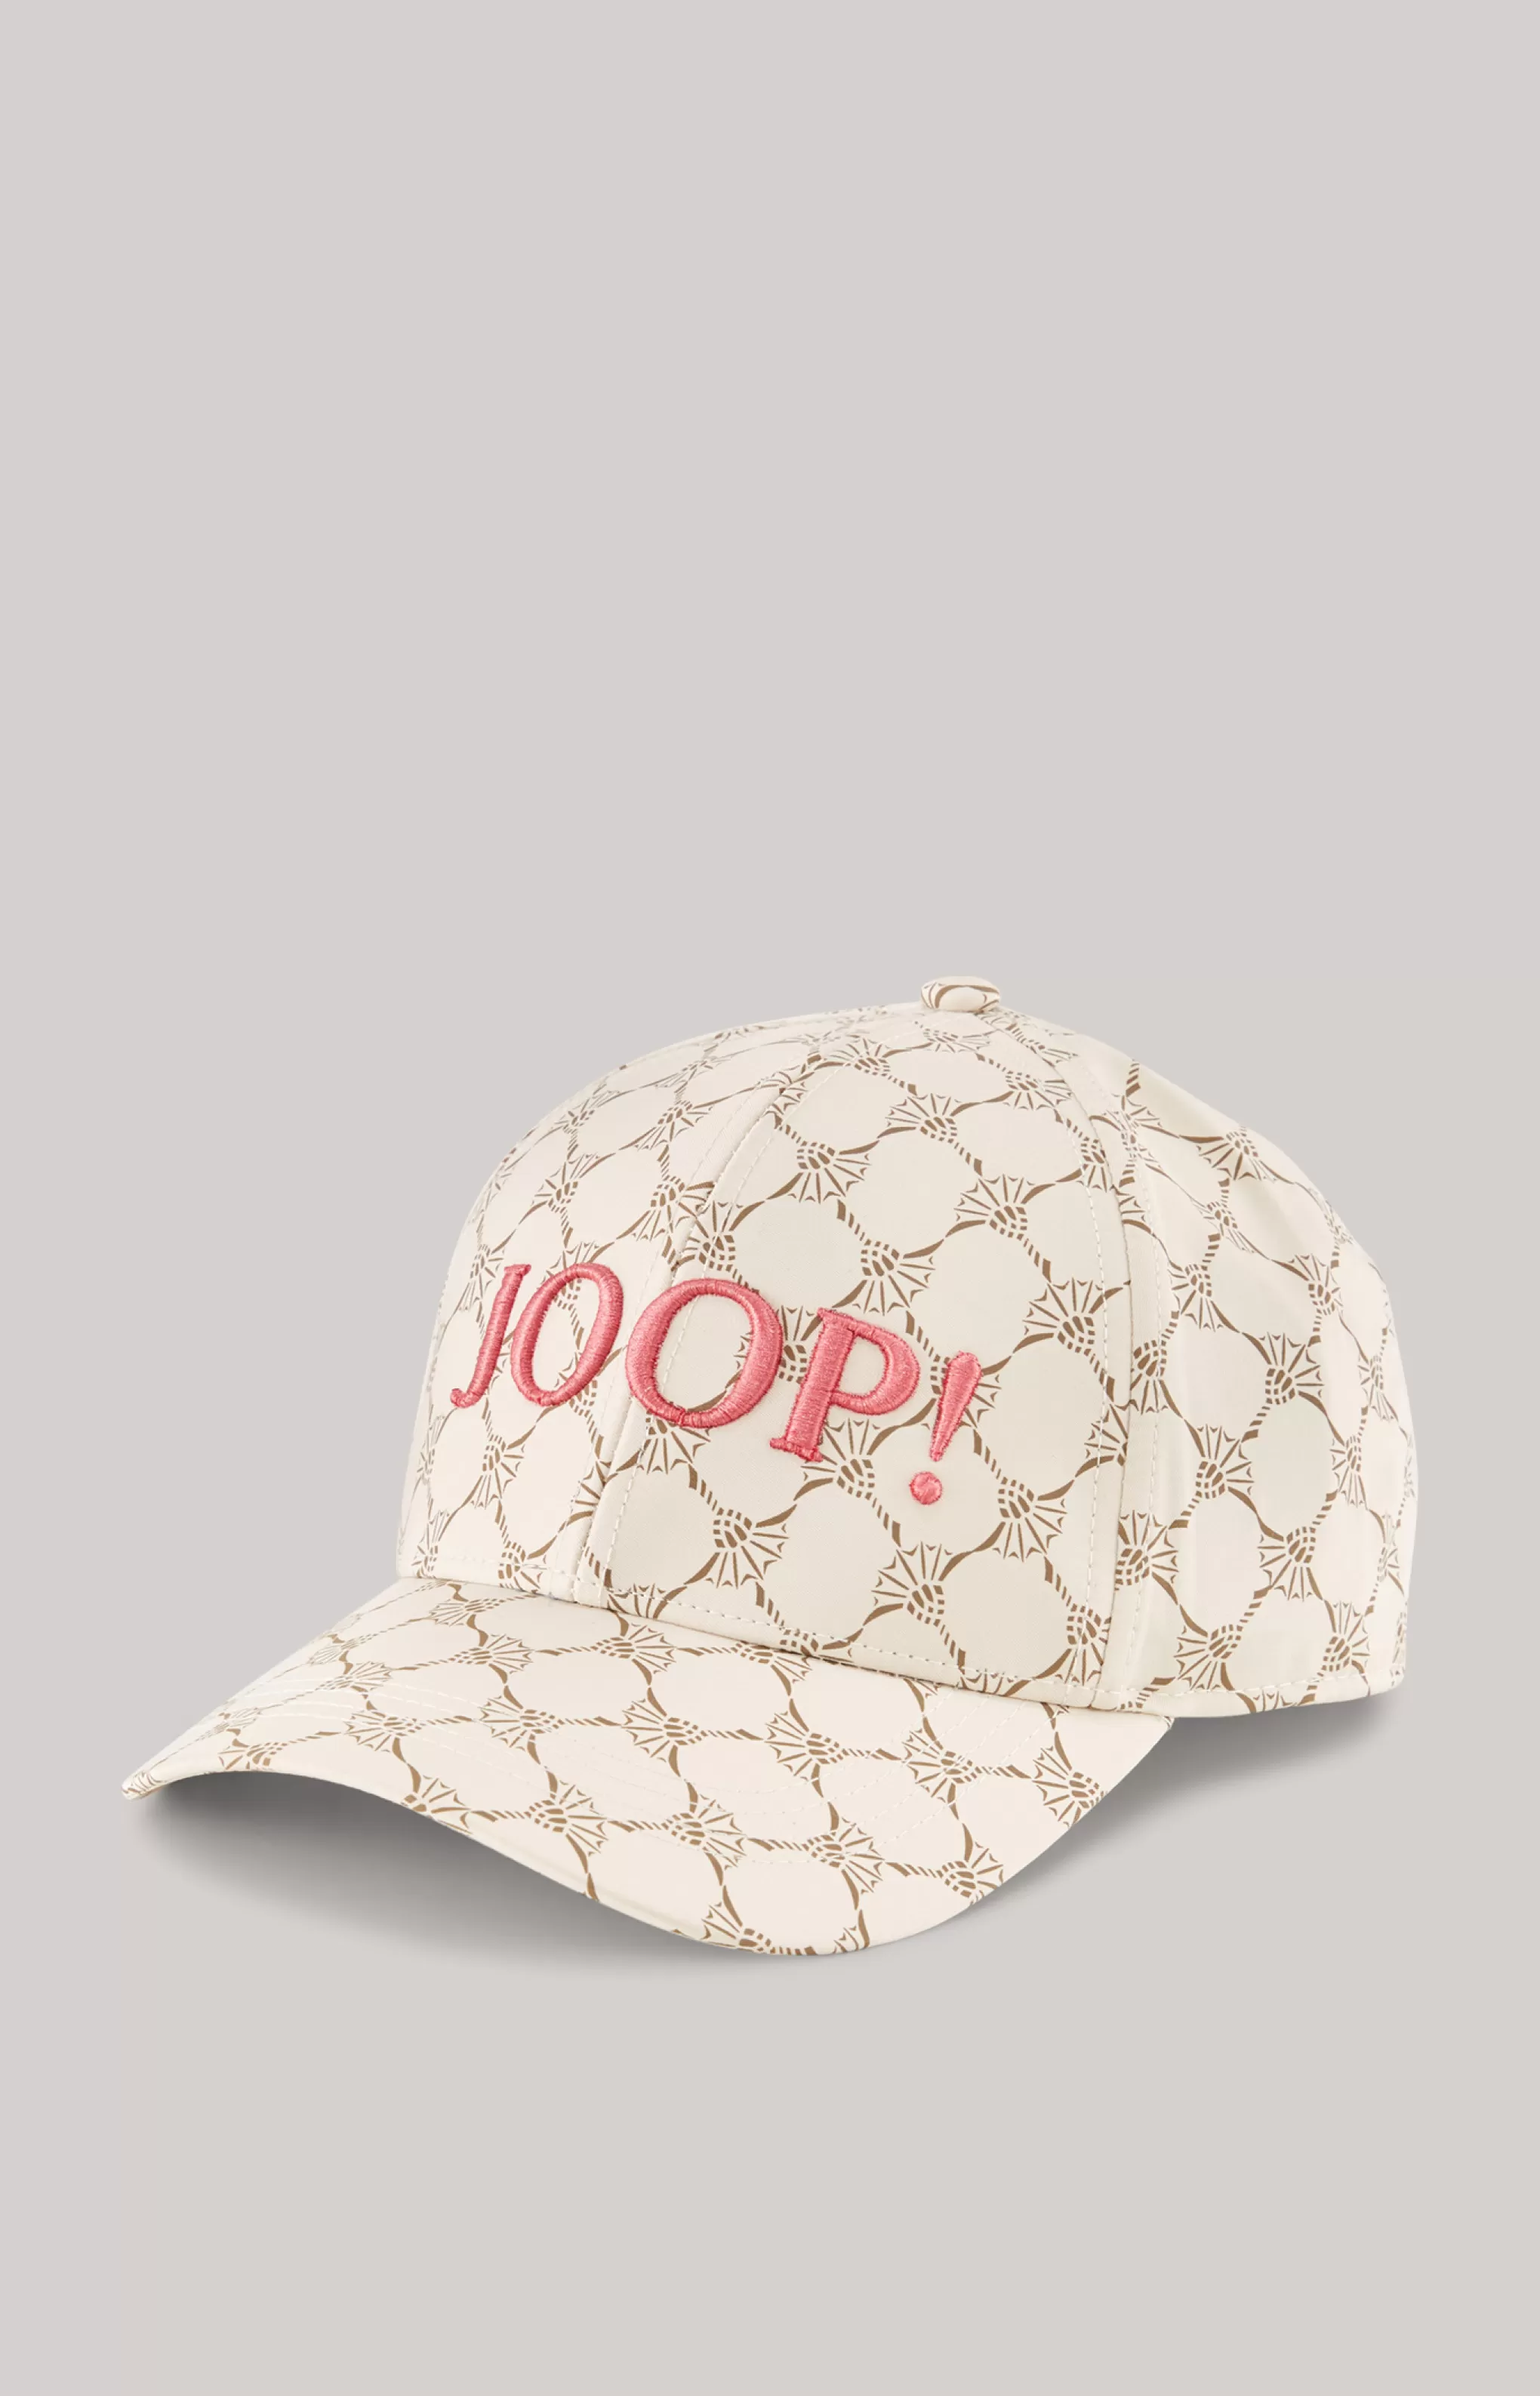 Scarves & Hats*JOOP Scarves & Hats Cap in Patterned Beige